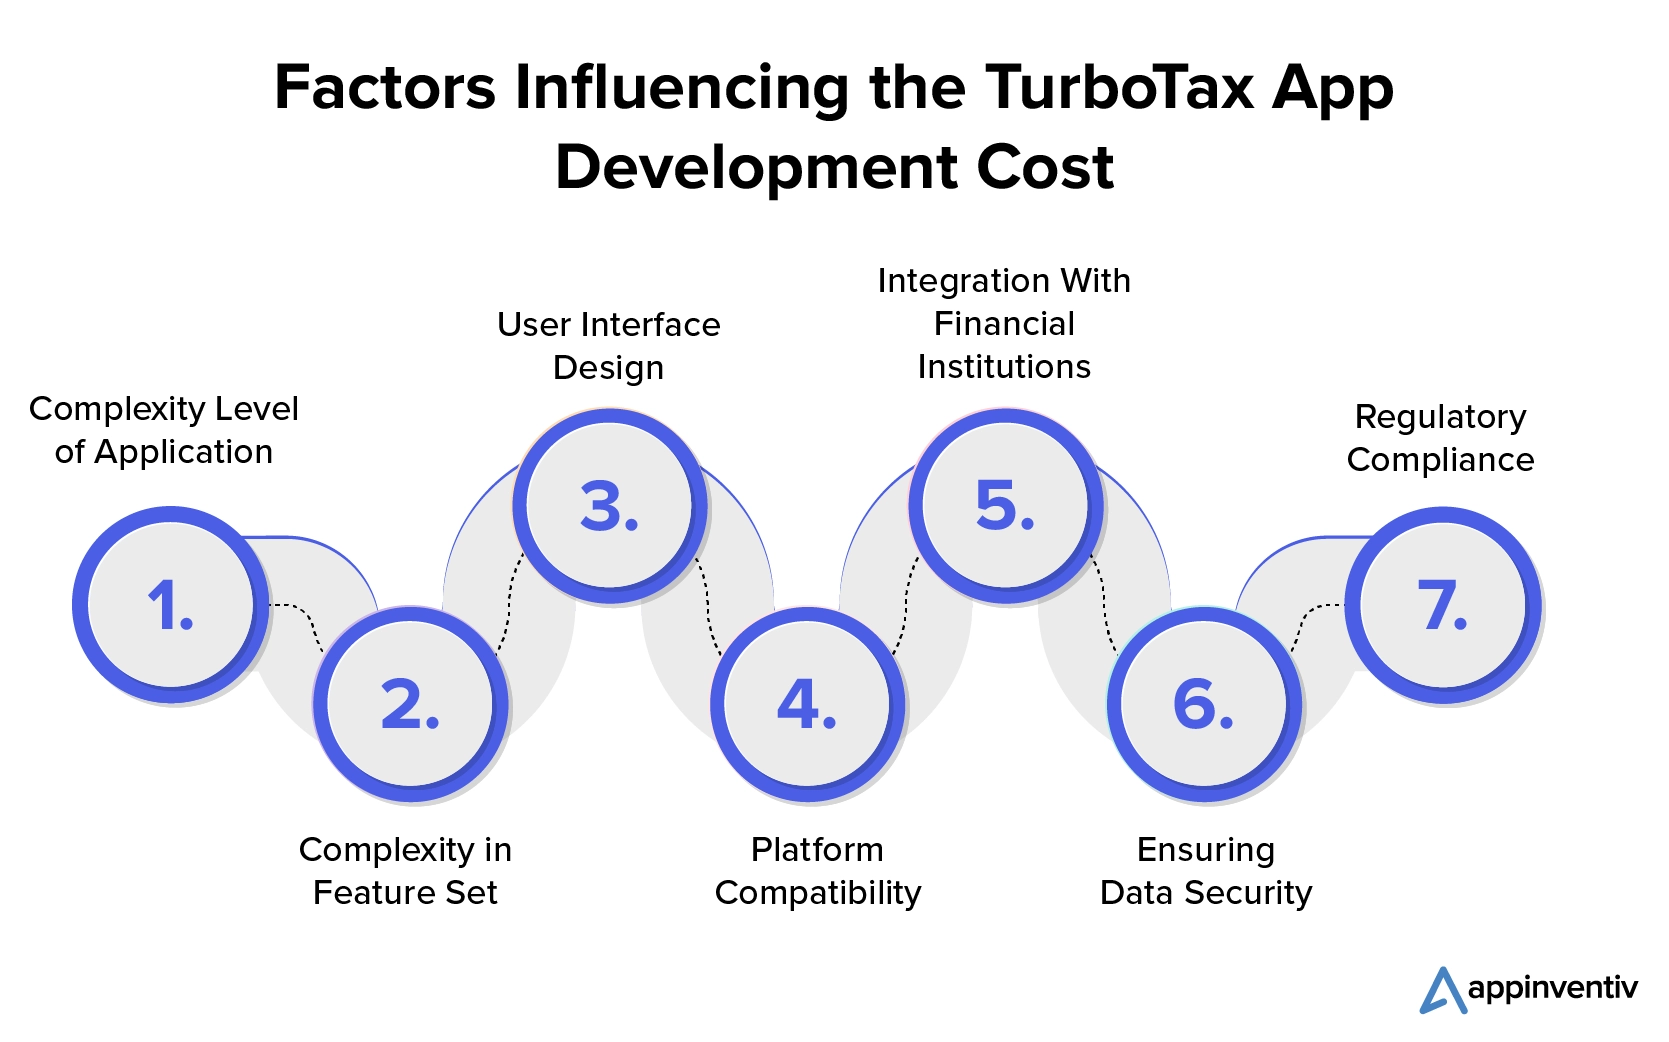 Factors Affecting the TurboTax App Development Cost